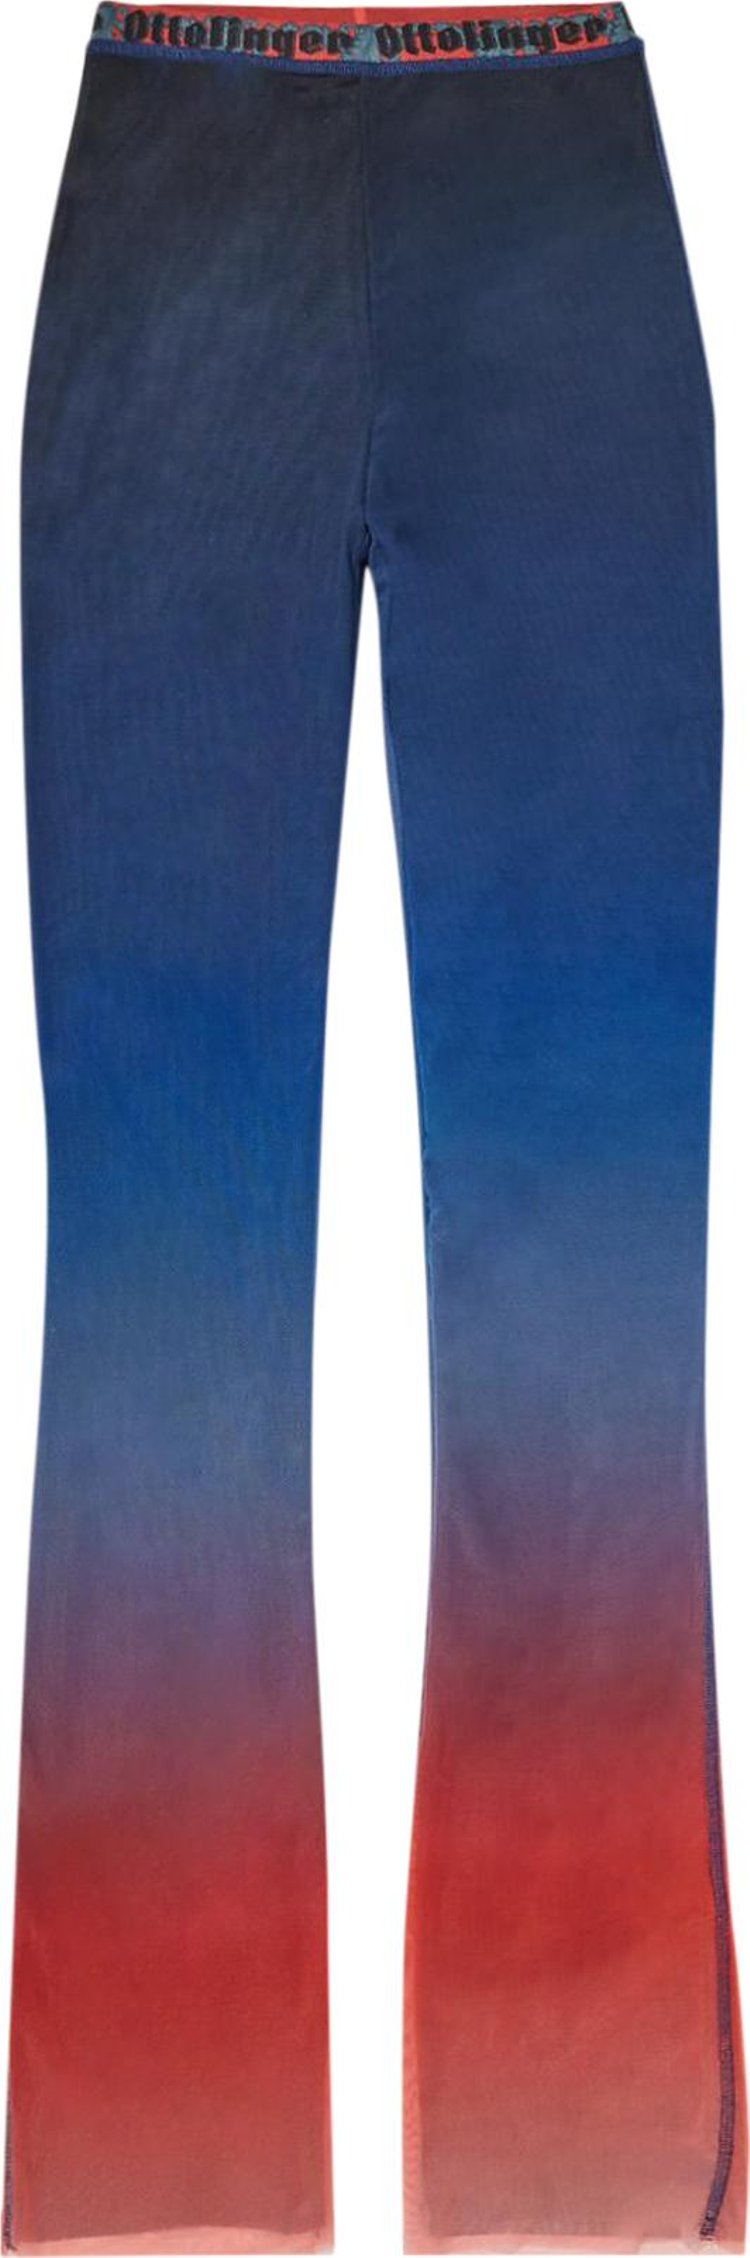 OTTOLINGER Mesh Pants Fade Blueberry fade